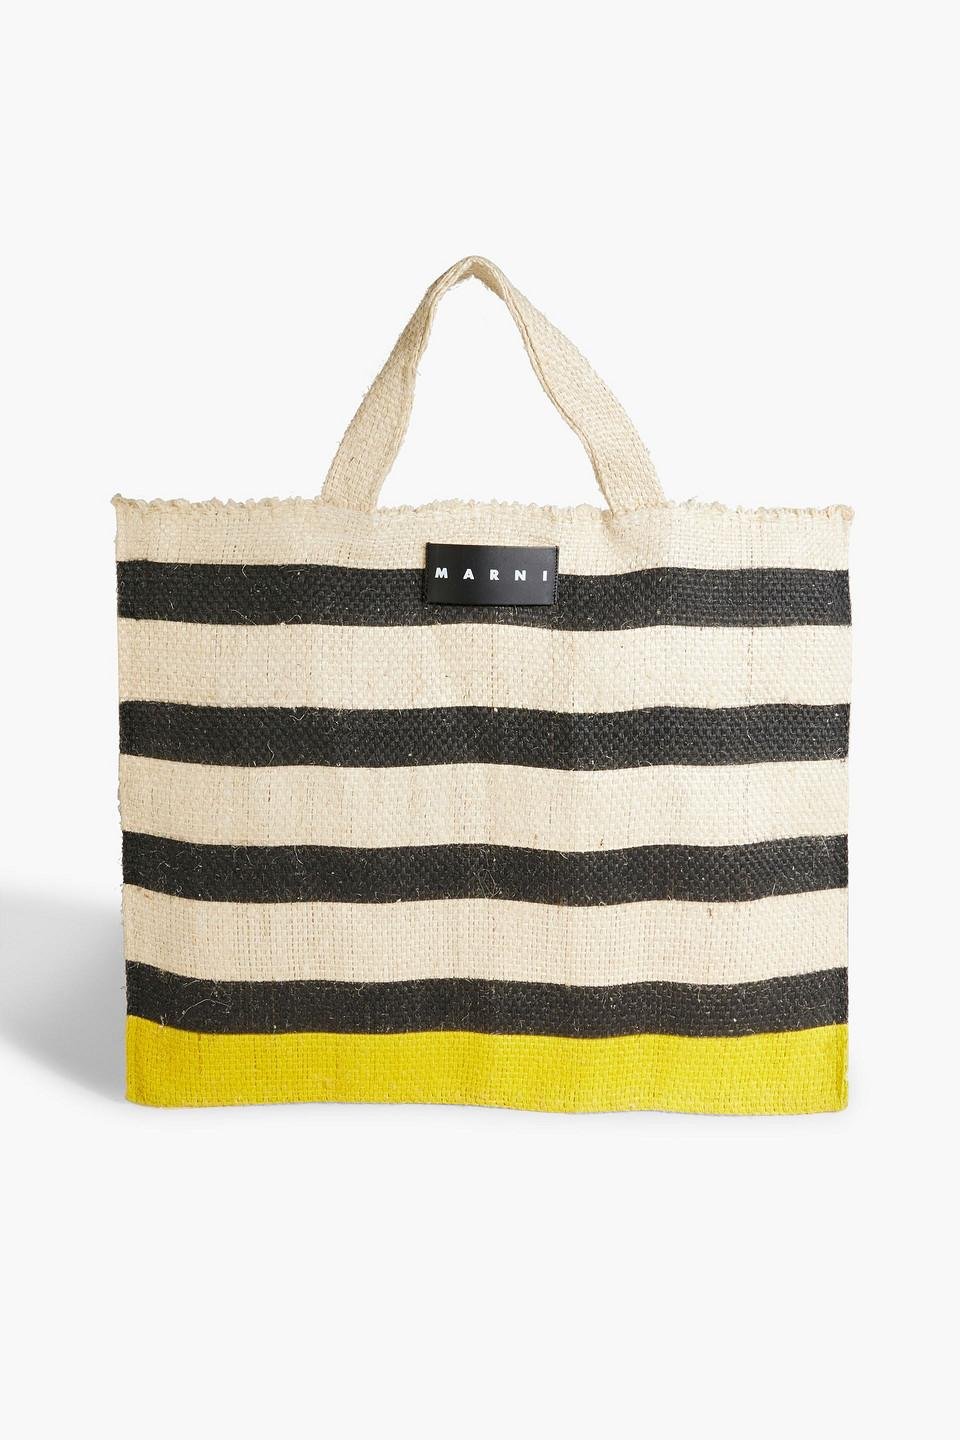 Marni logo-embroidered checkered shopping bag - Neutrals